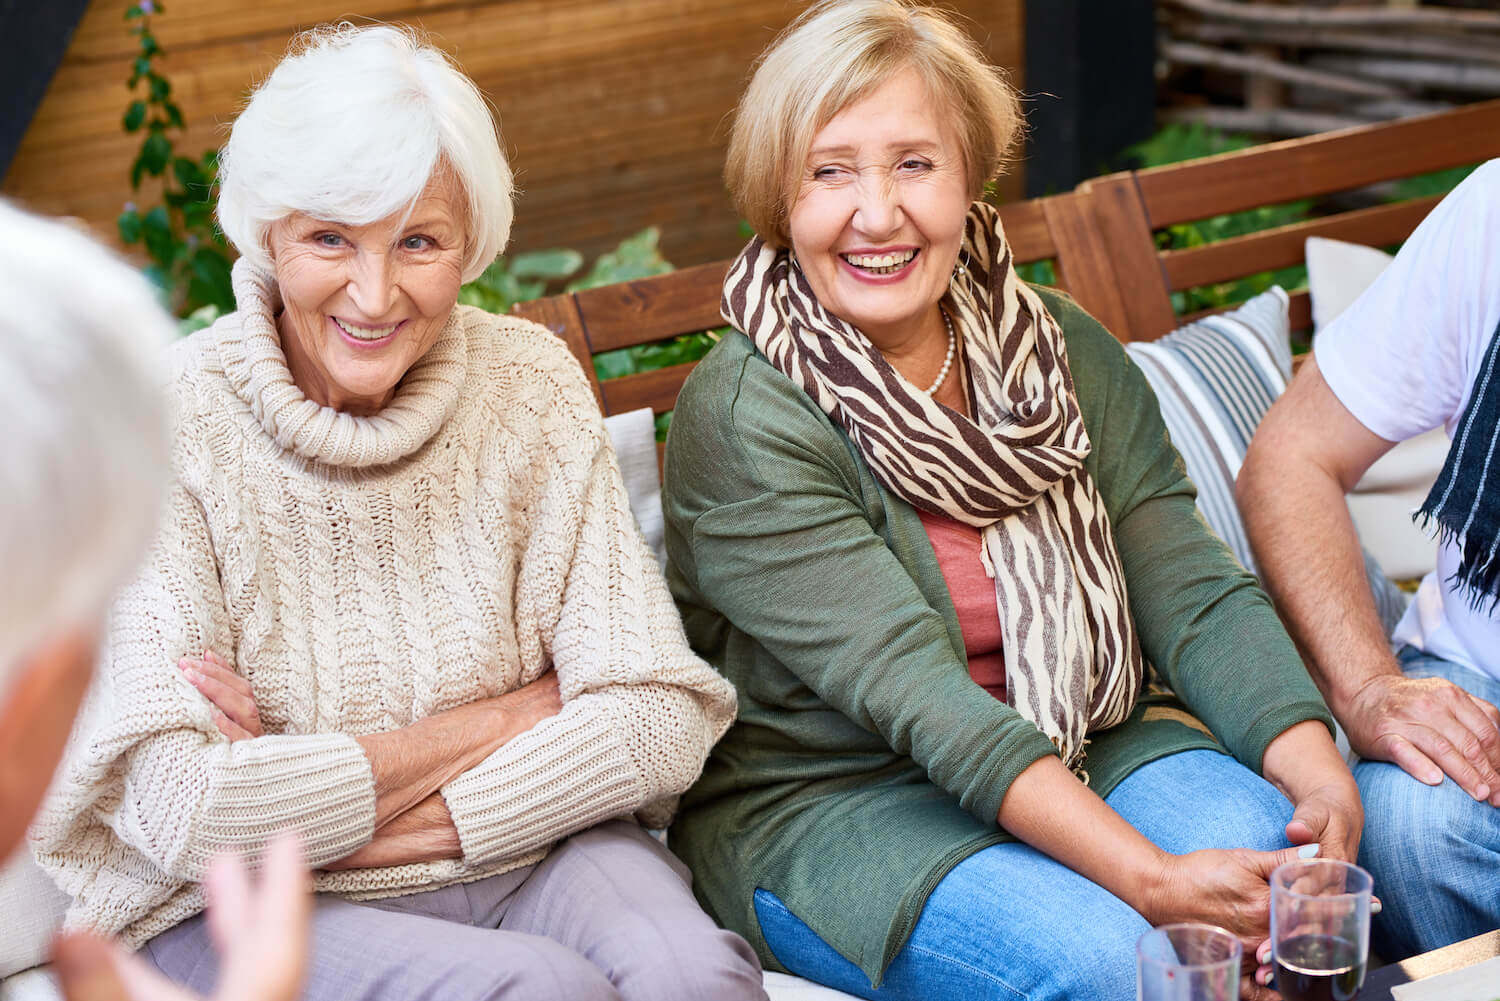 Senior women socializing on a patio bench